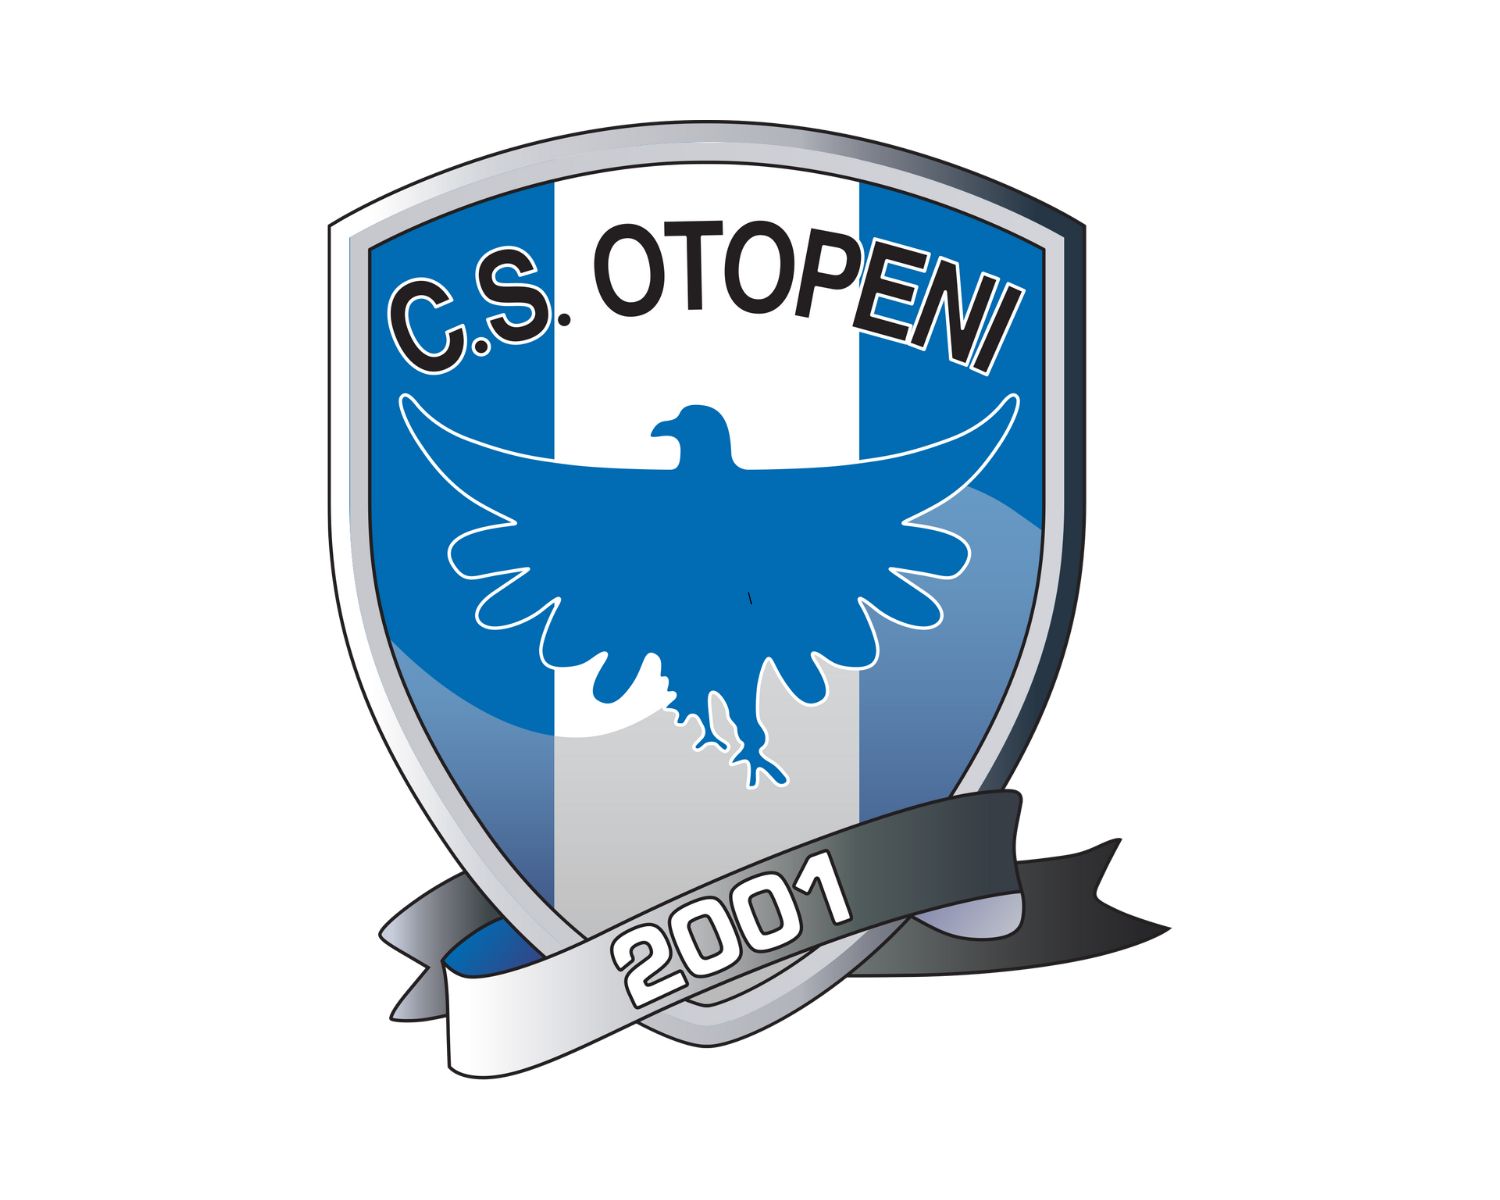 cs-otopeni-21-football-club-facts